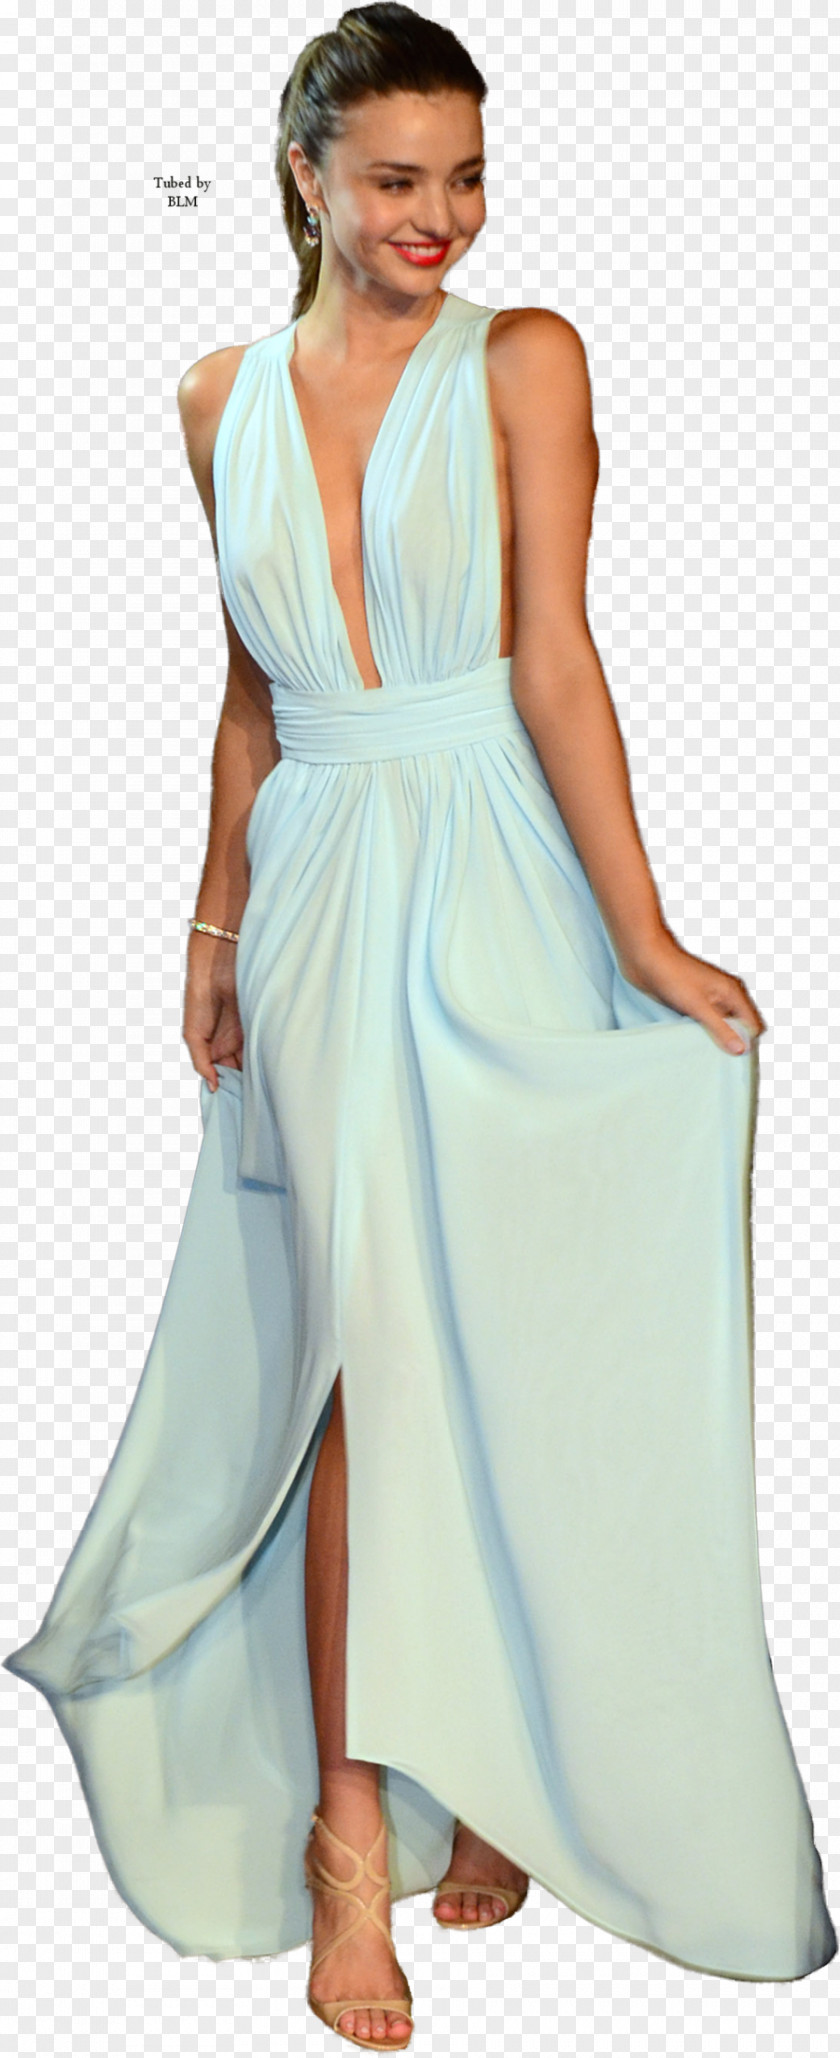 Miranda Kerr Cocktail Dress Wedding Clothing Little Black PNG